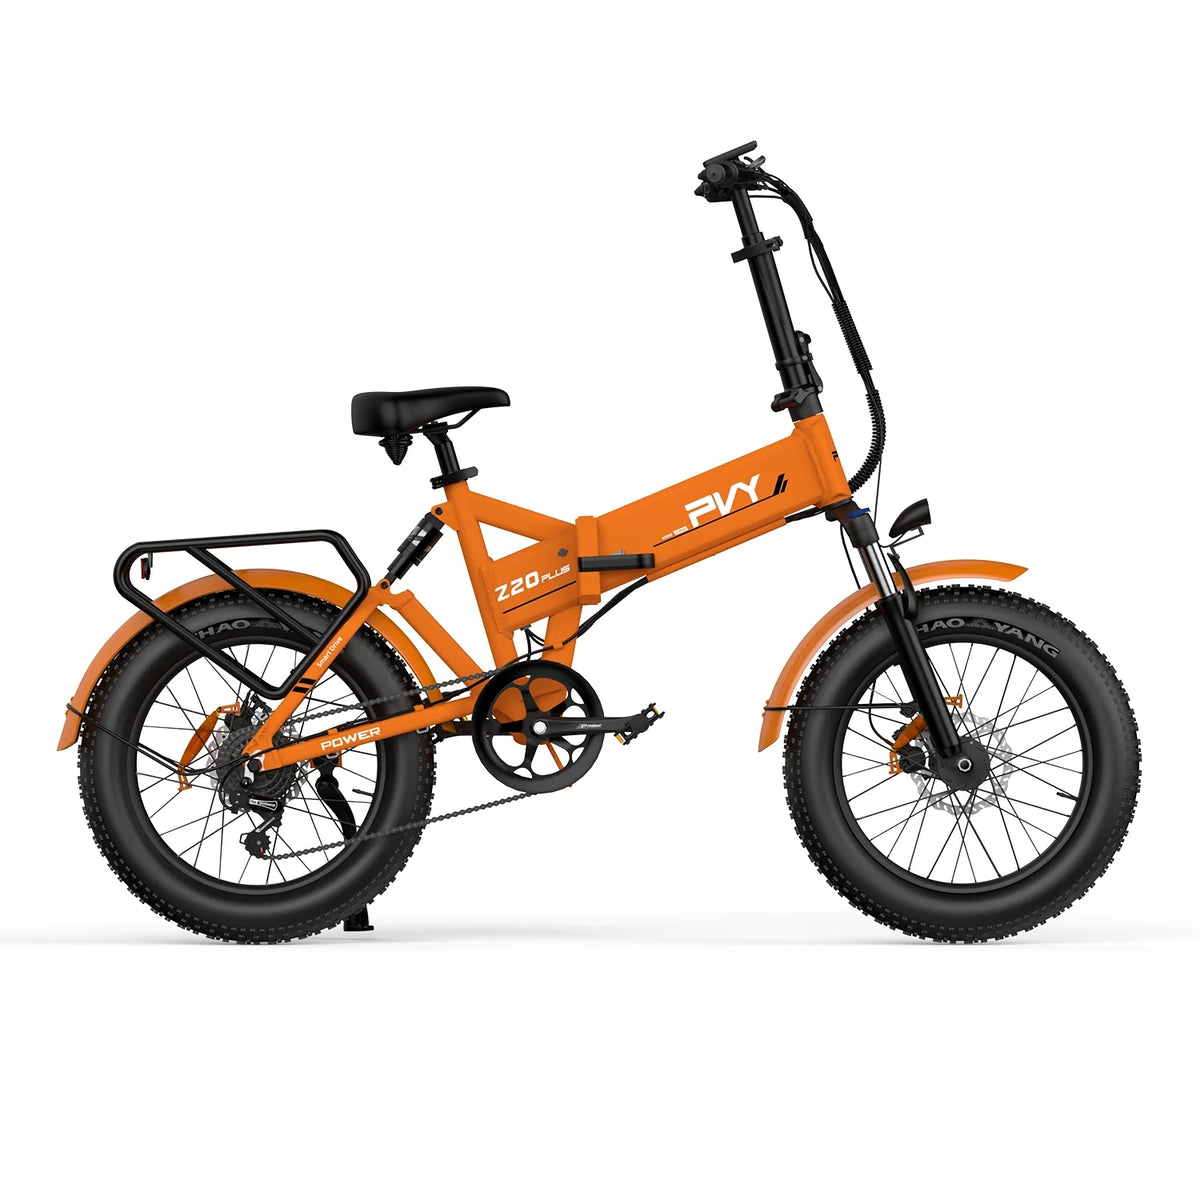 PVY Z20 Plus 1000 Electric Bike - 250W Motor 48V16.5AH 120KM Range Battery Hydraulic Disc Brakes - Orange